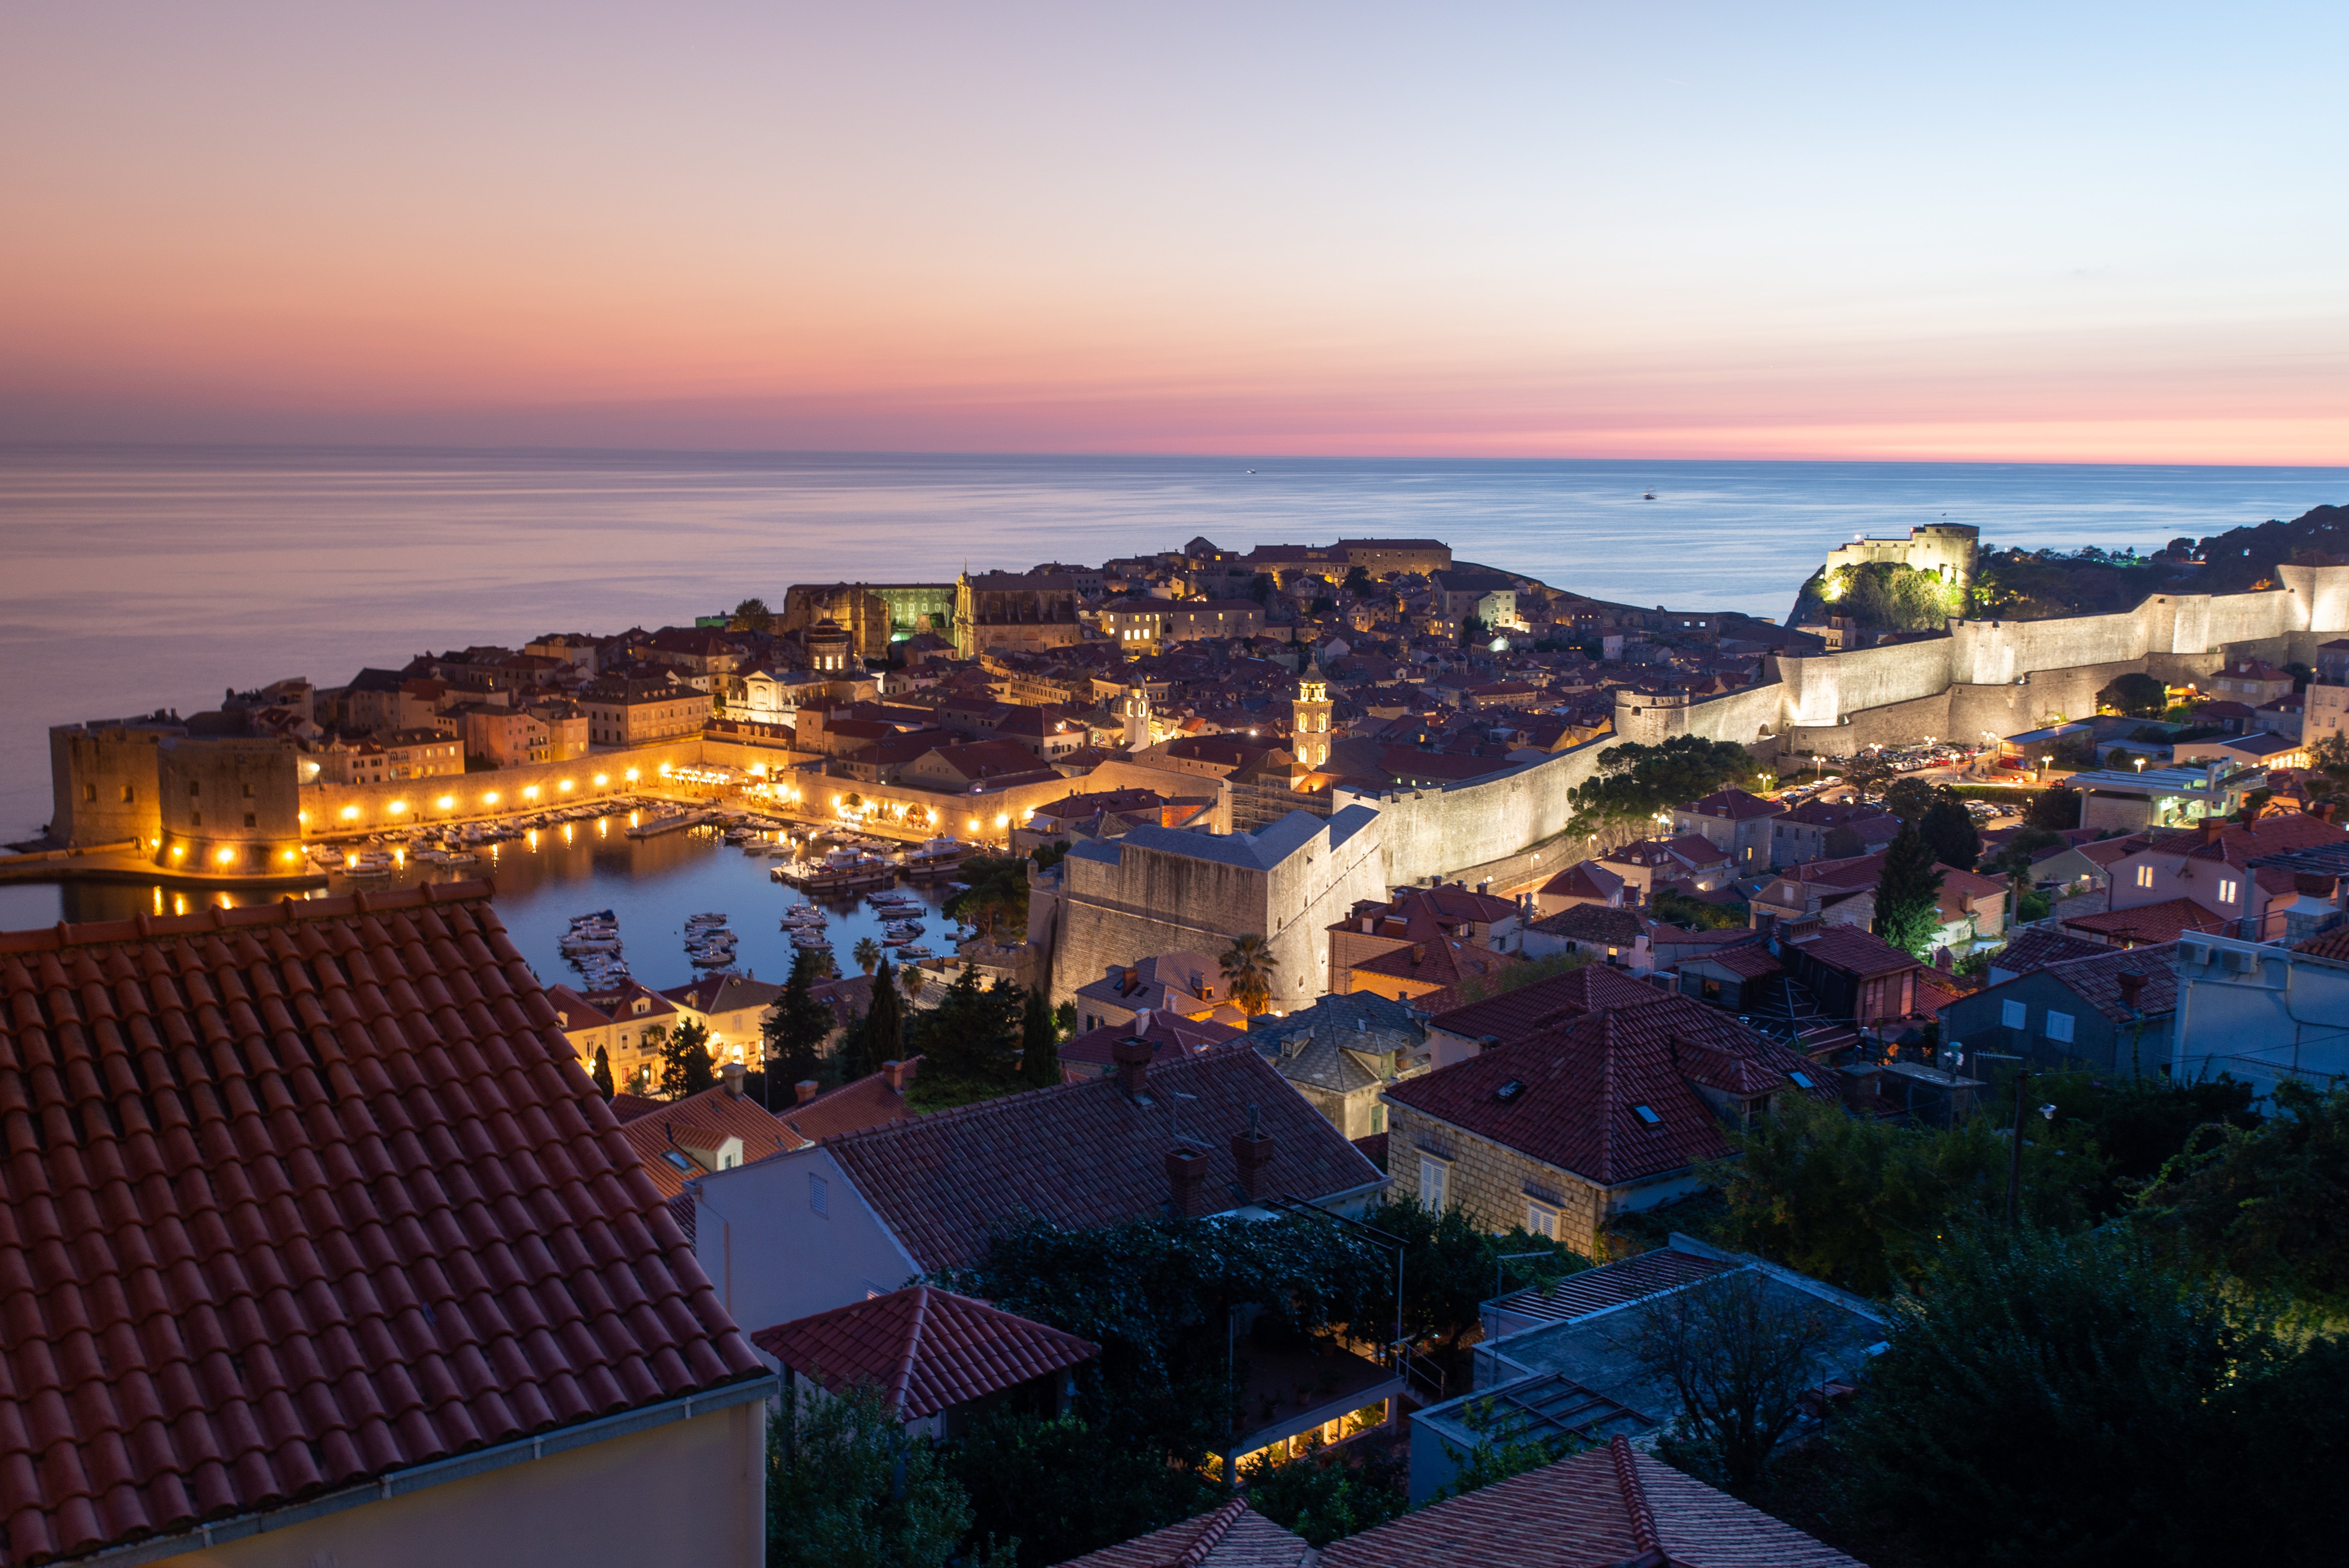 Croatia’s walled city of Dubrovnik, overlooking the Adriatic Sea